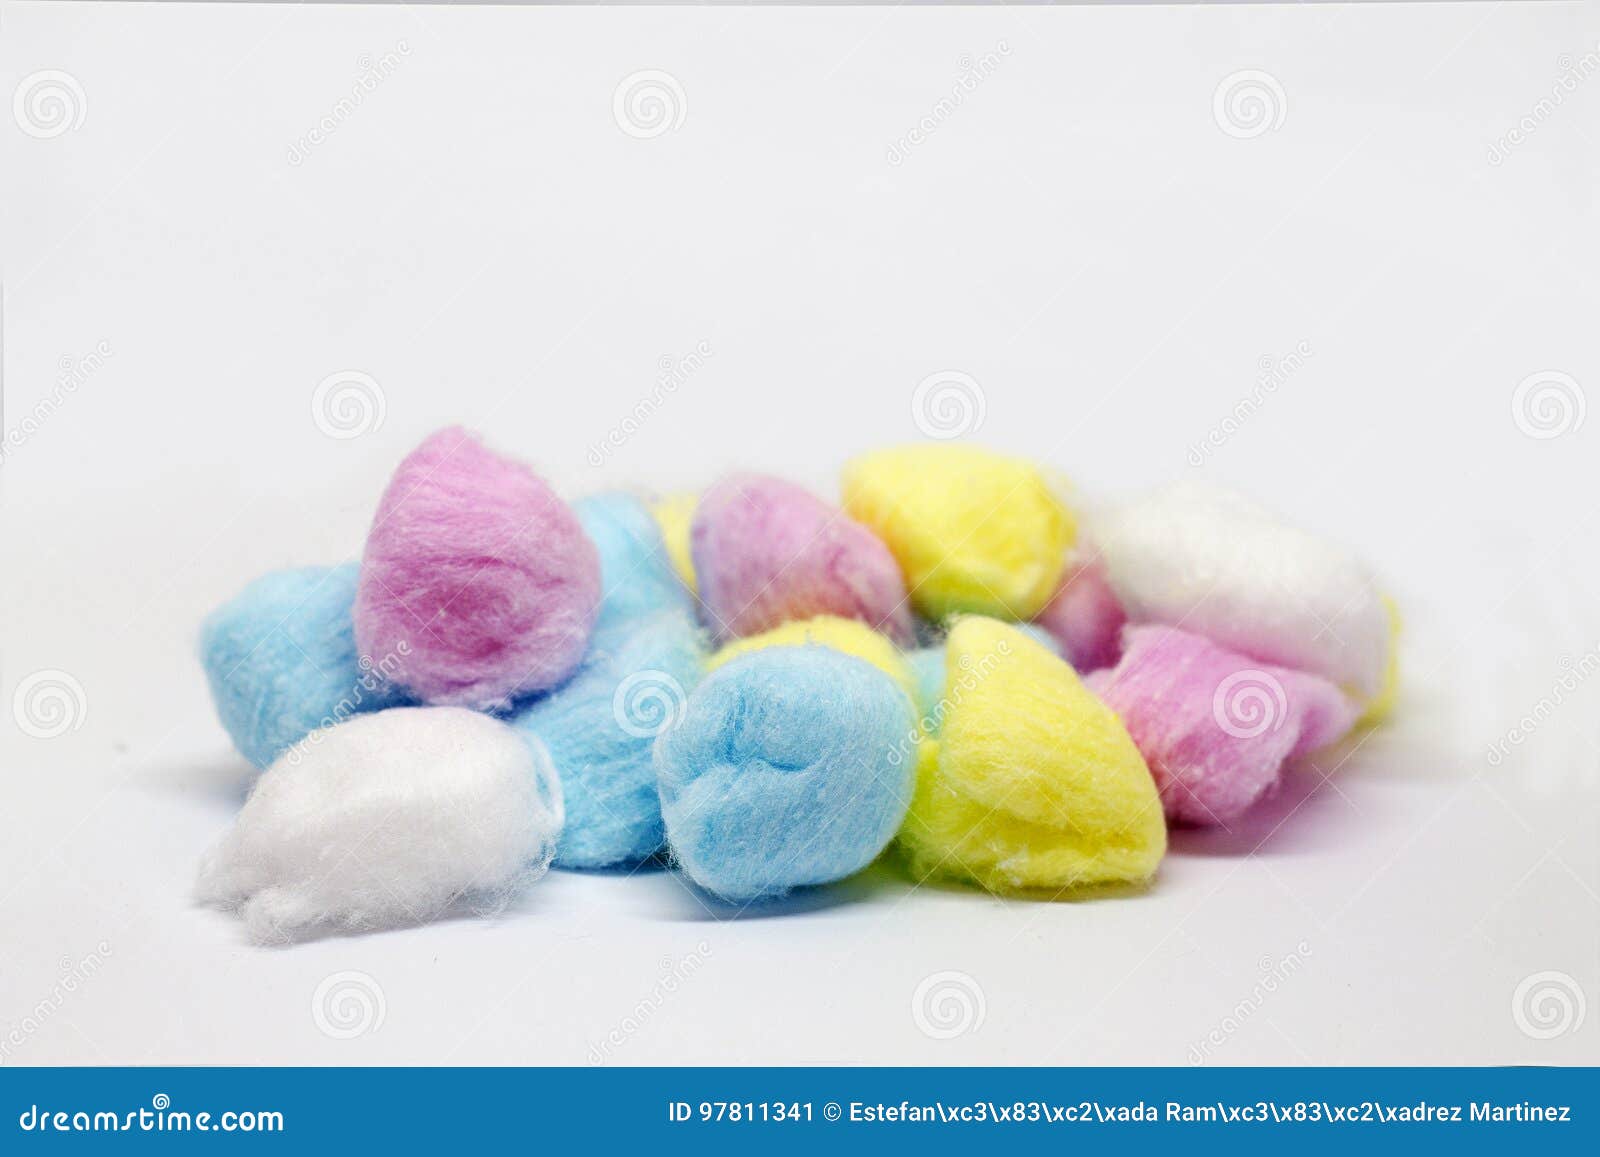 colorful cotton